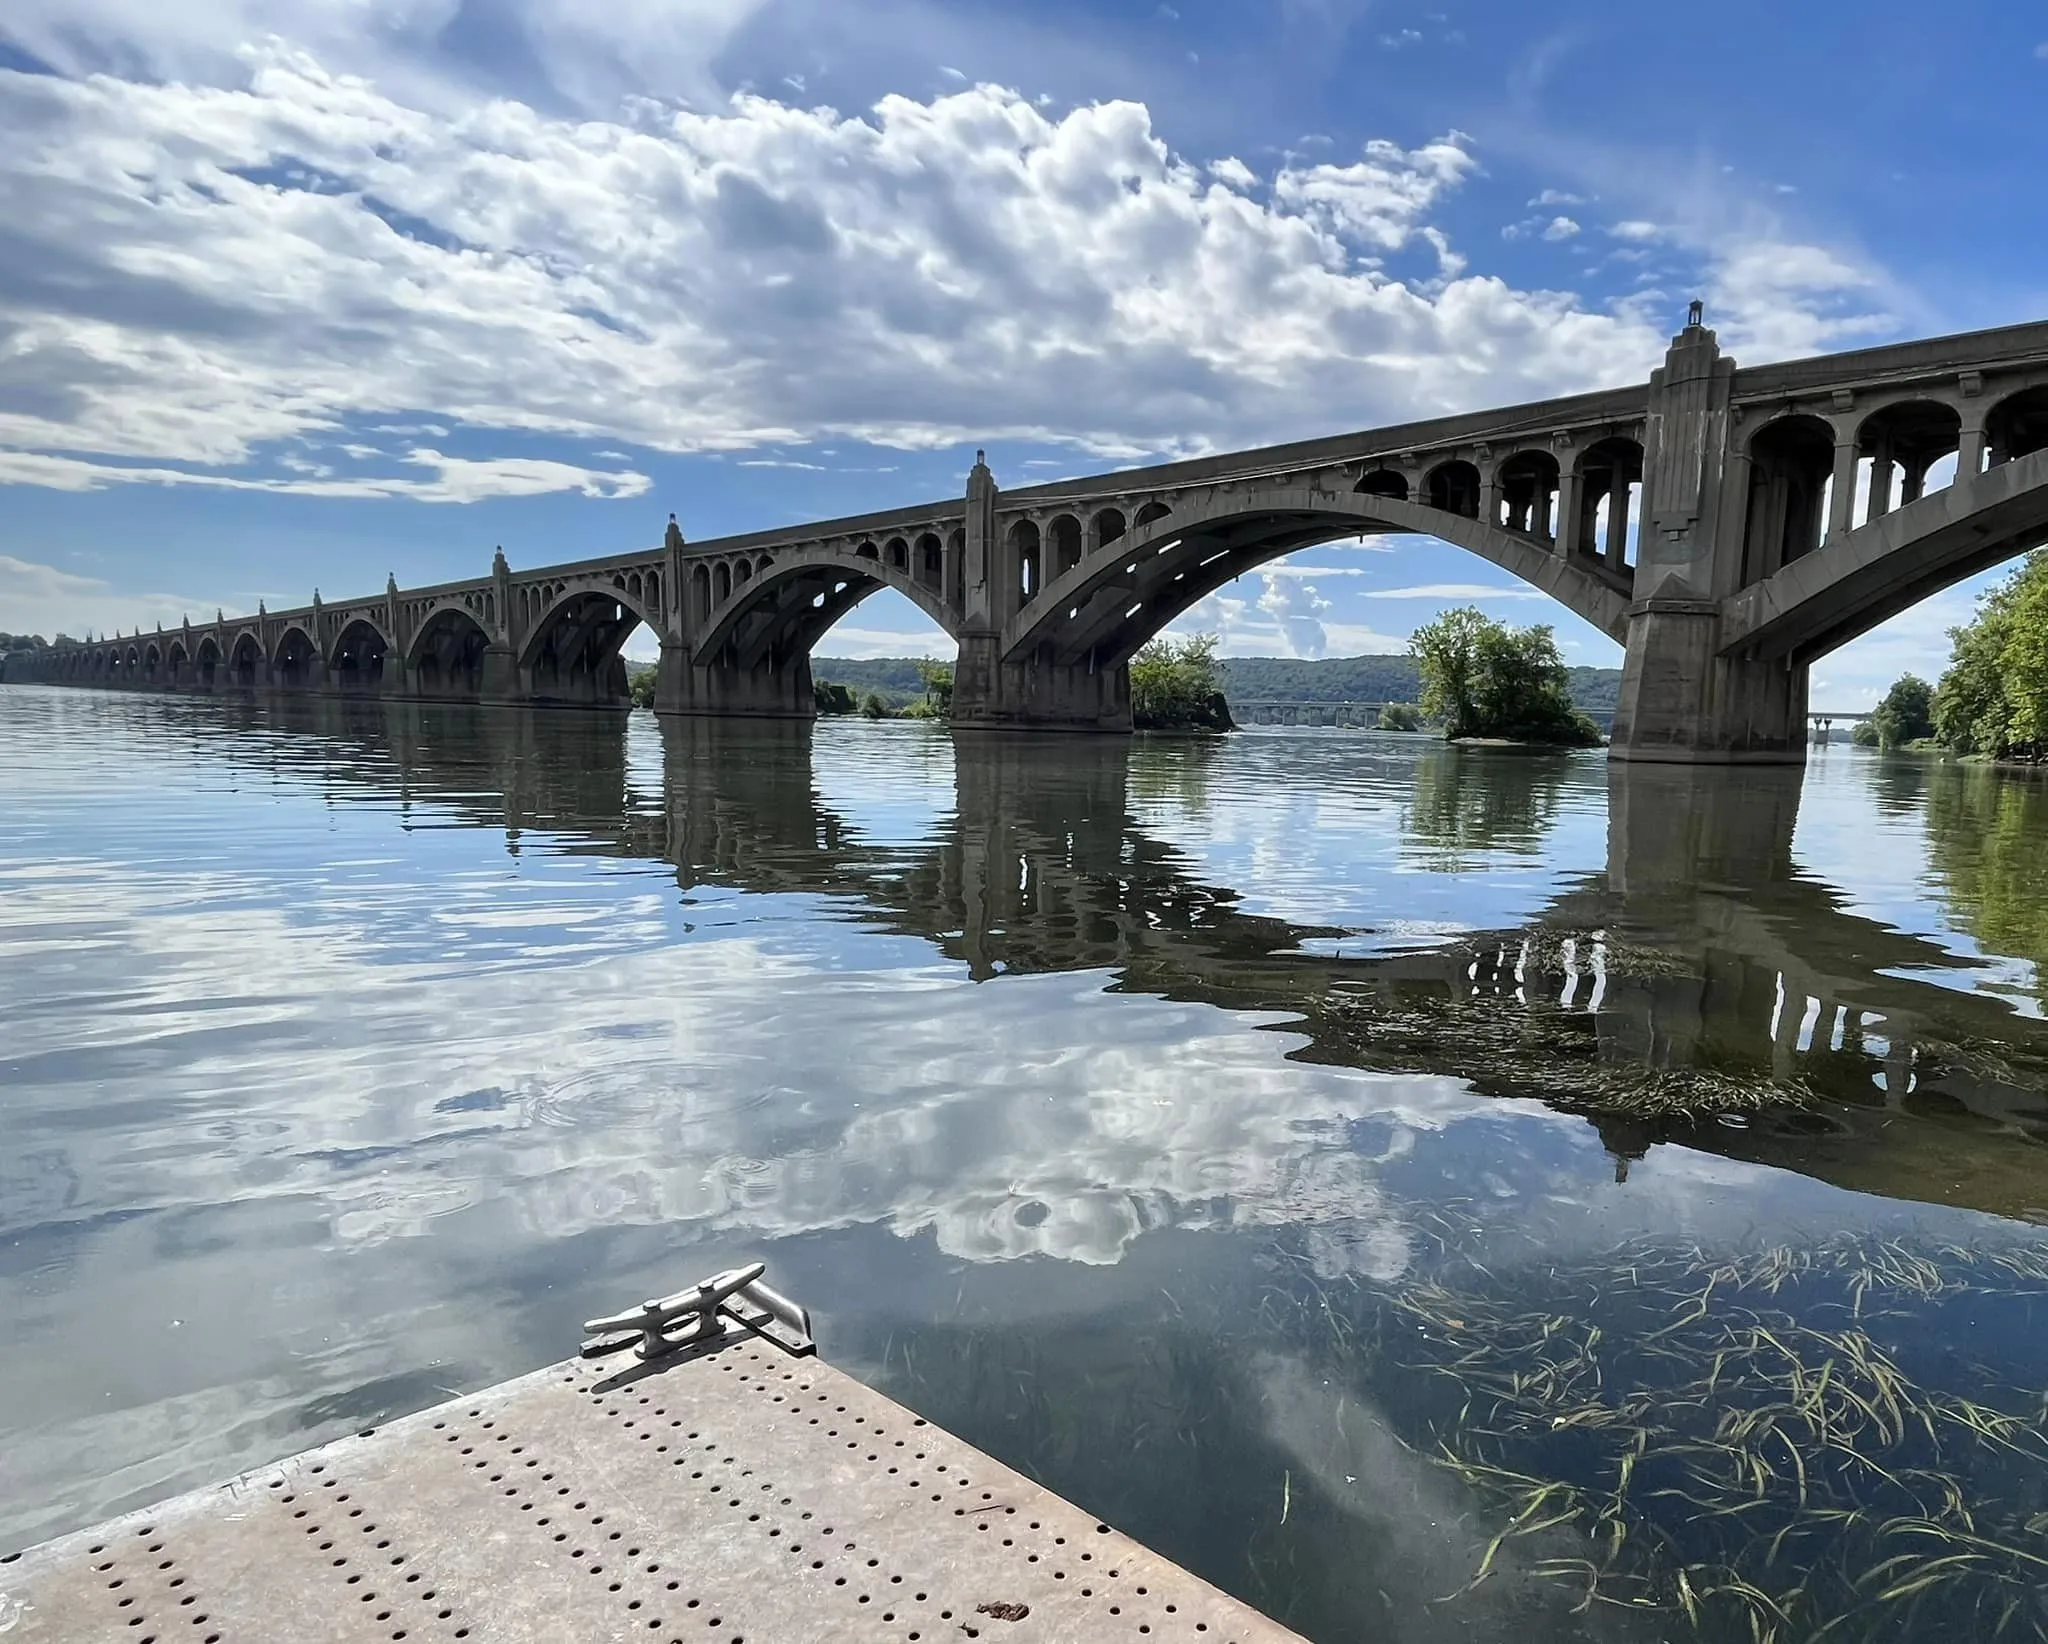 Susquehanna River Covered Bridge, PennsylvaniaDestroyed on June 28, 1863